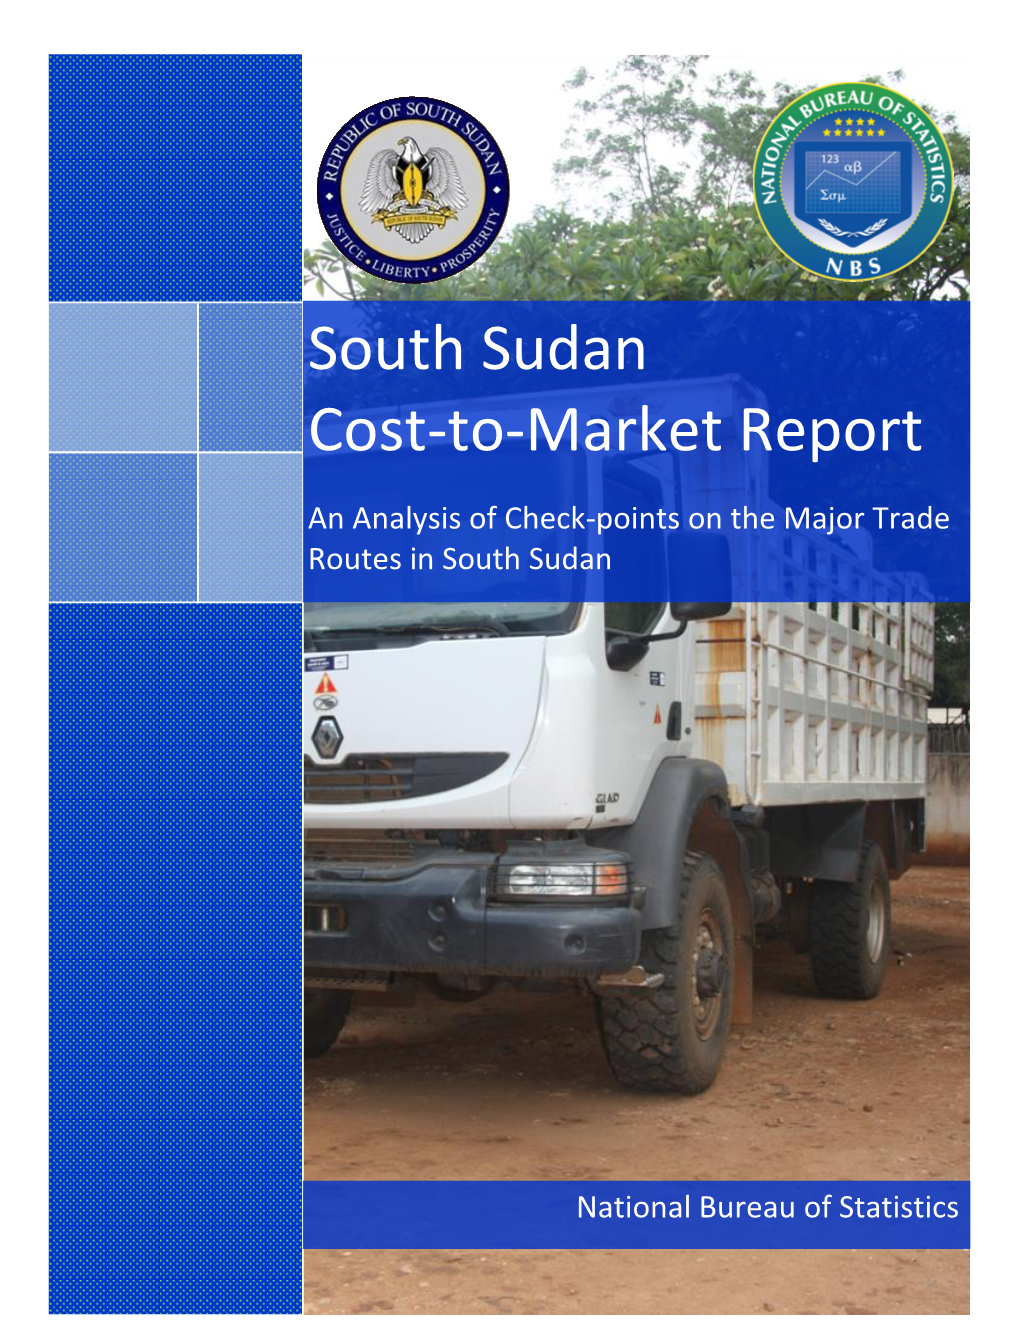 South Sudan Cost-To-Market Report